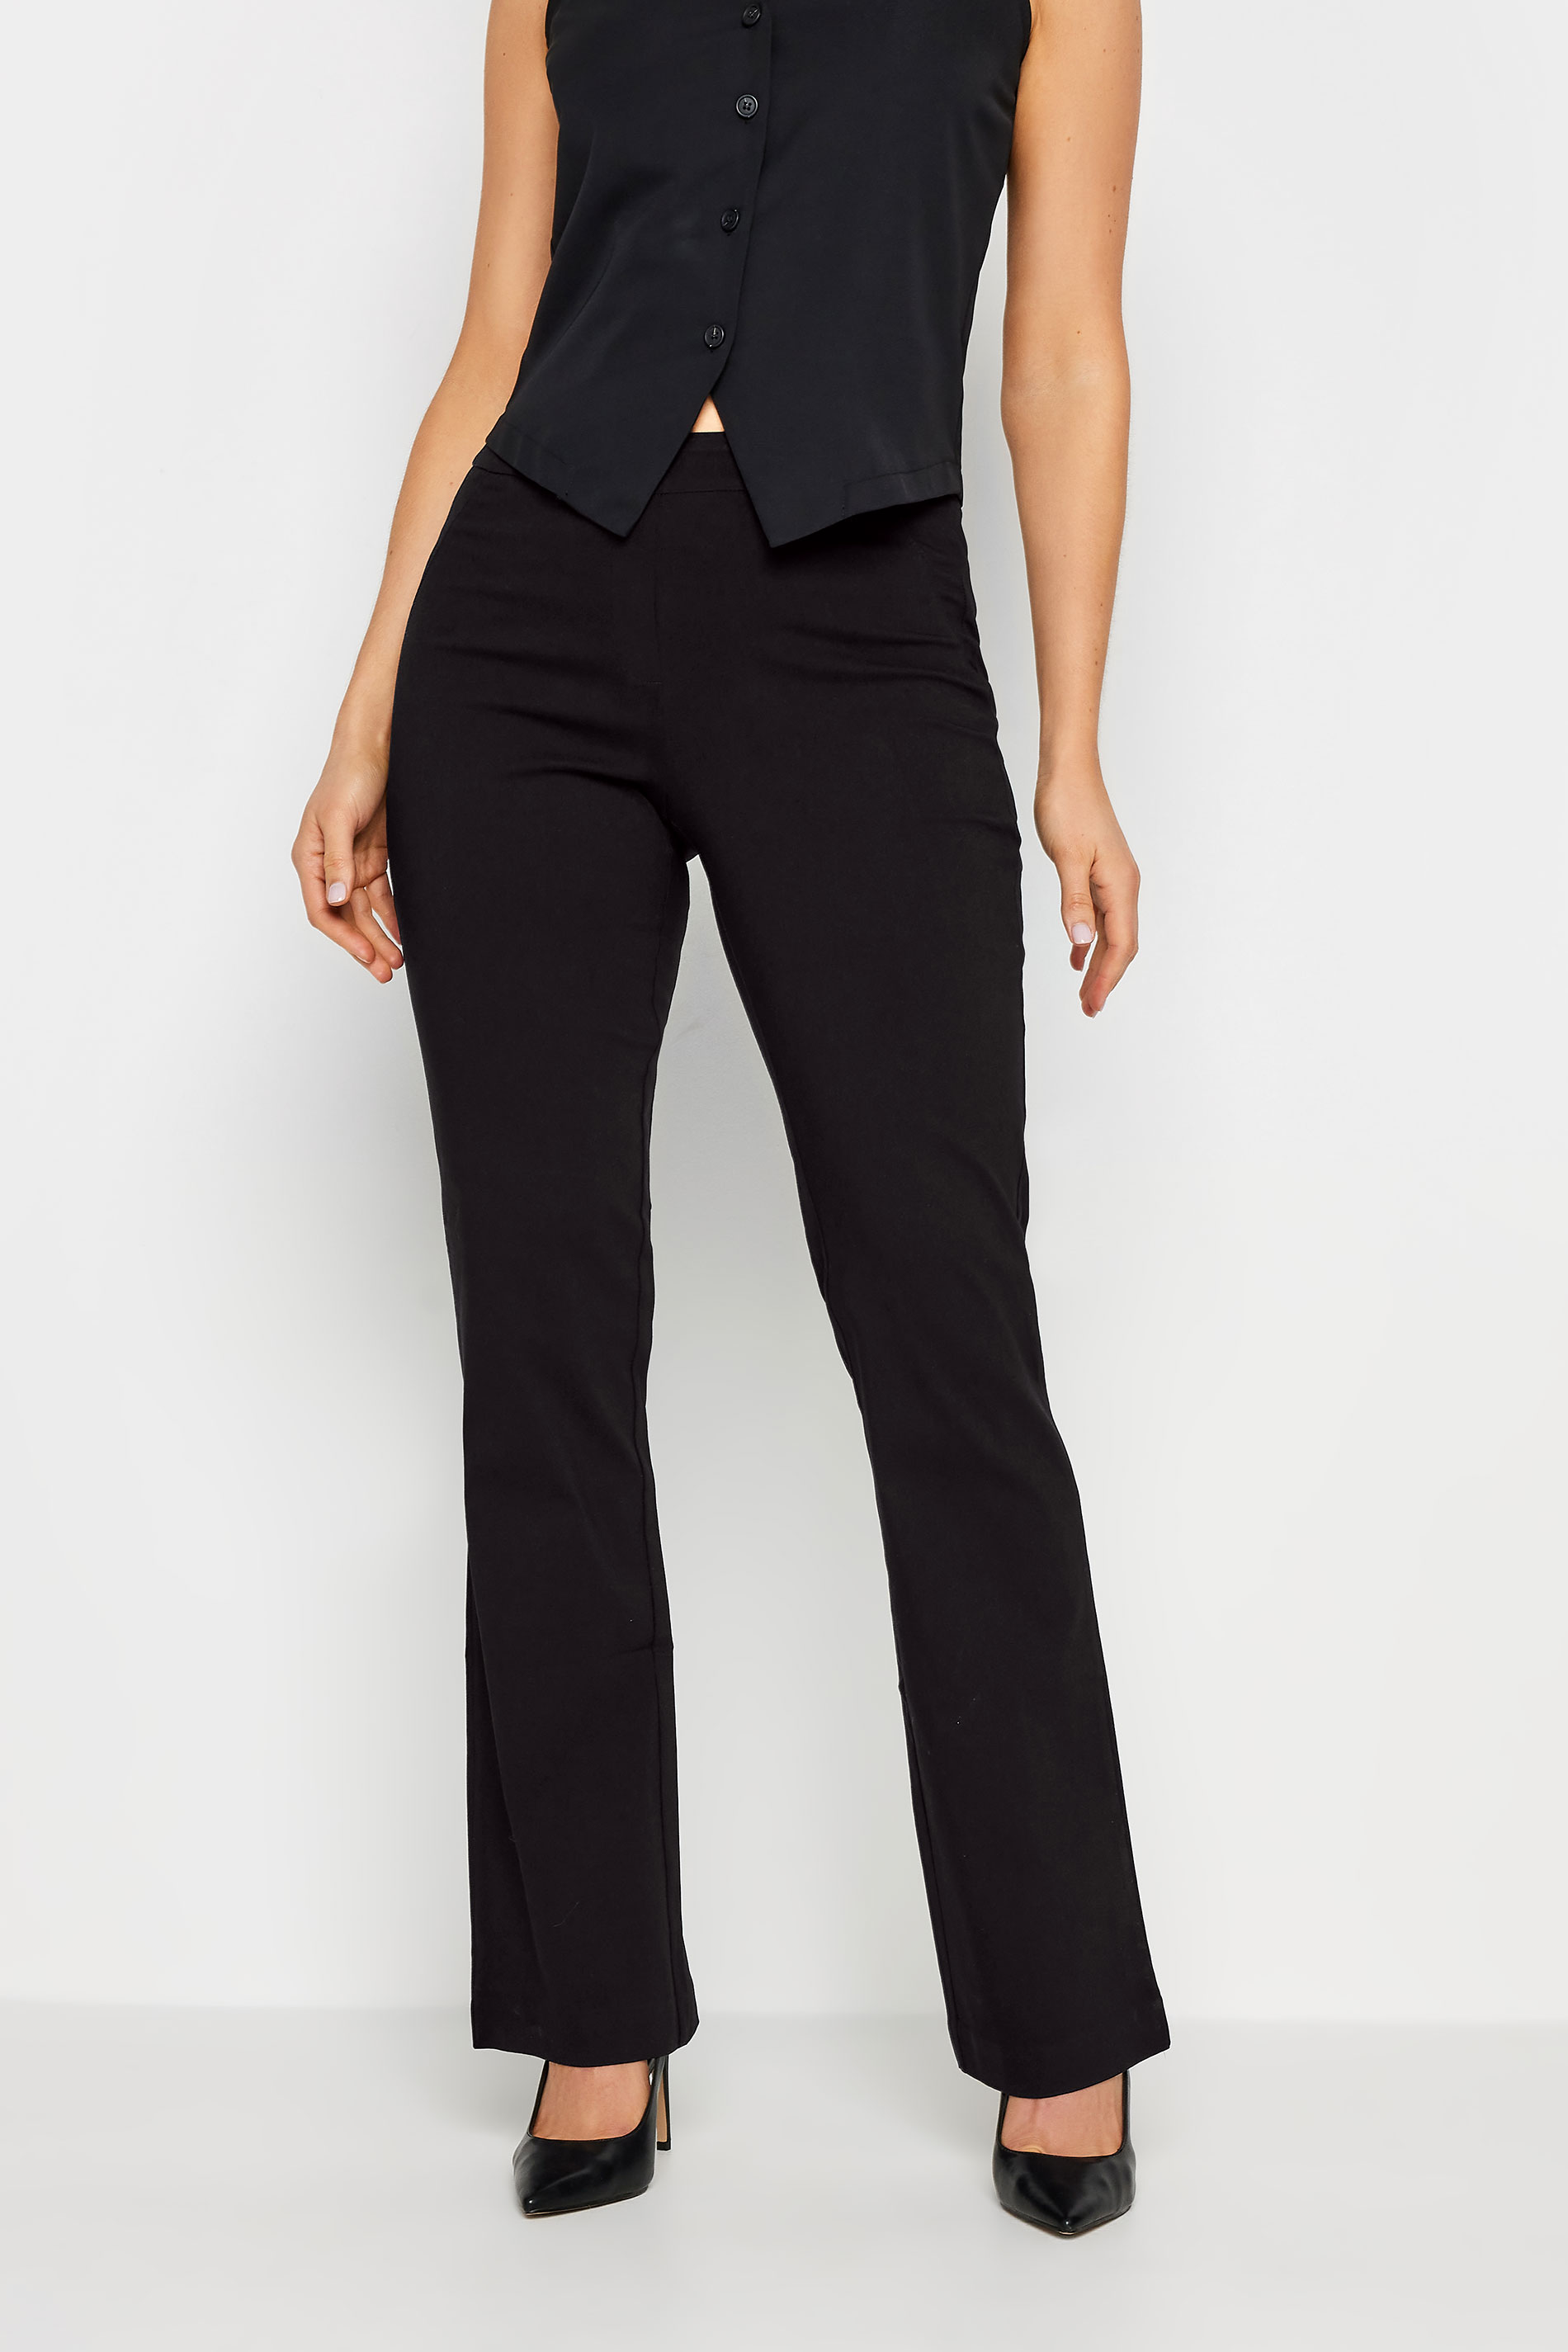 LTS Tall Women's Black Bootcut Trousers | Long Tall Sally 2